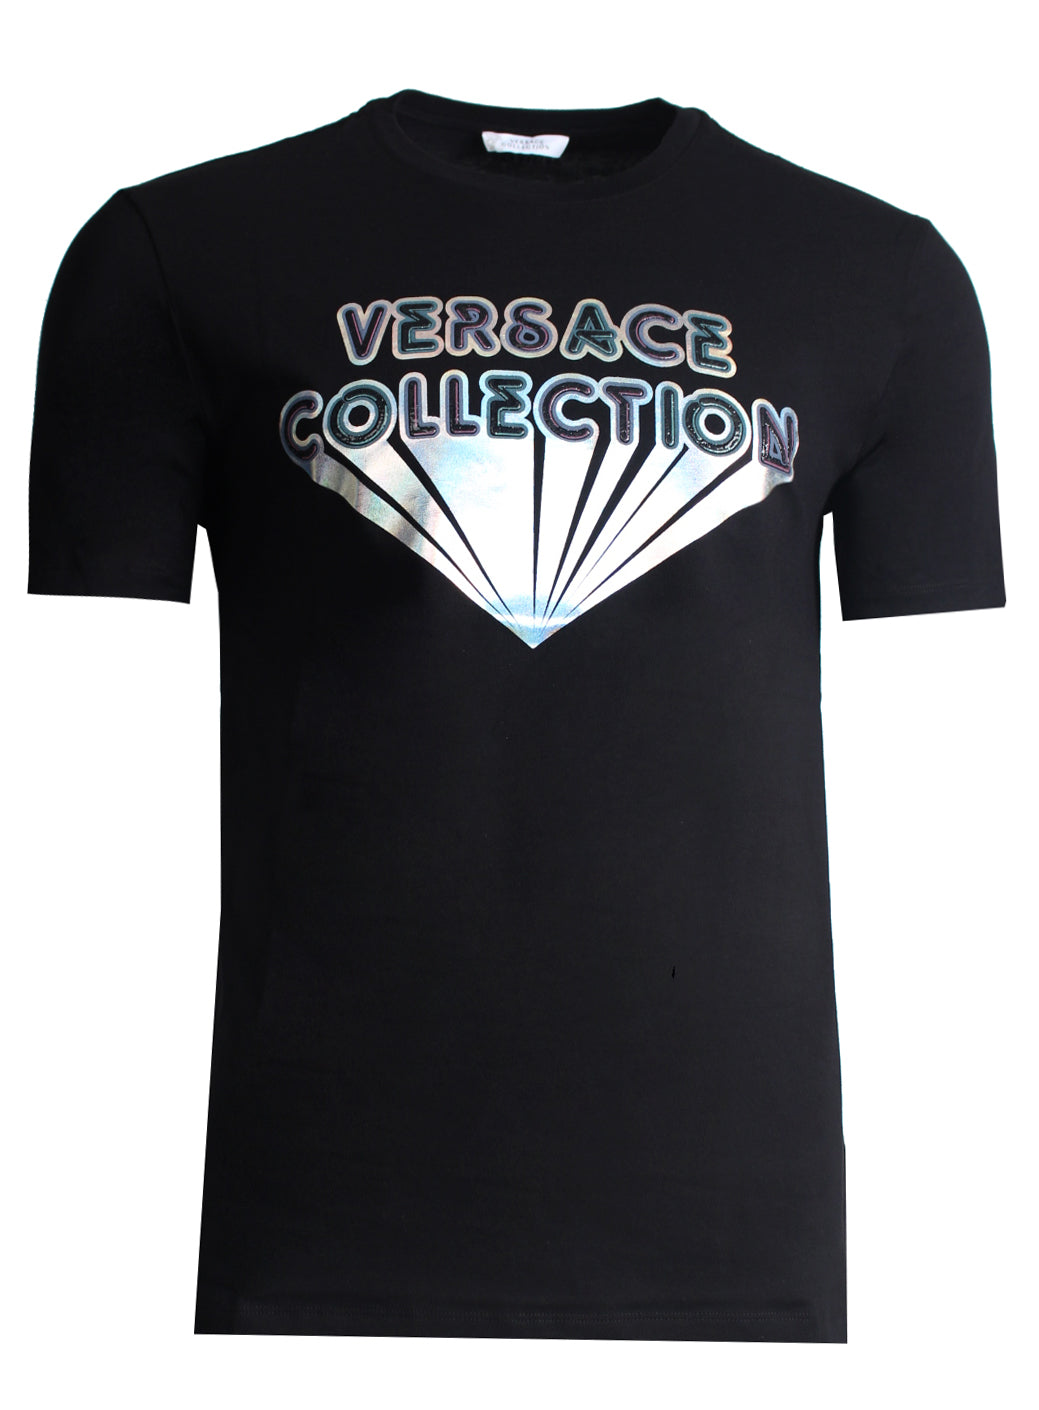 Versace Collection Tee Shirt